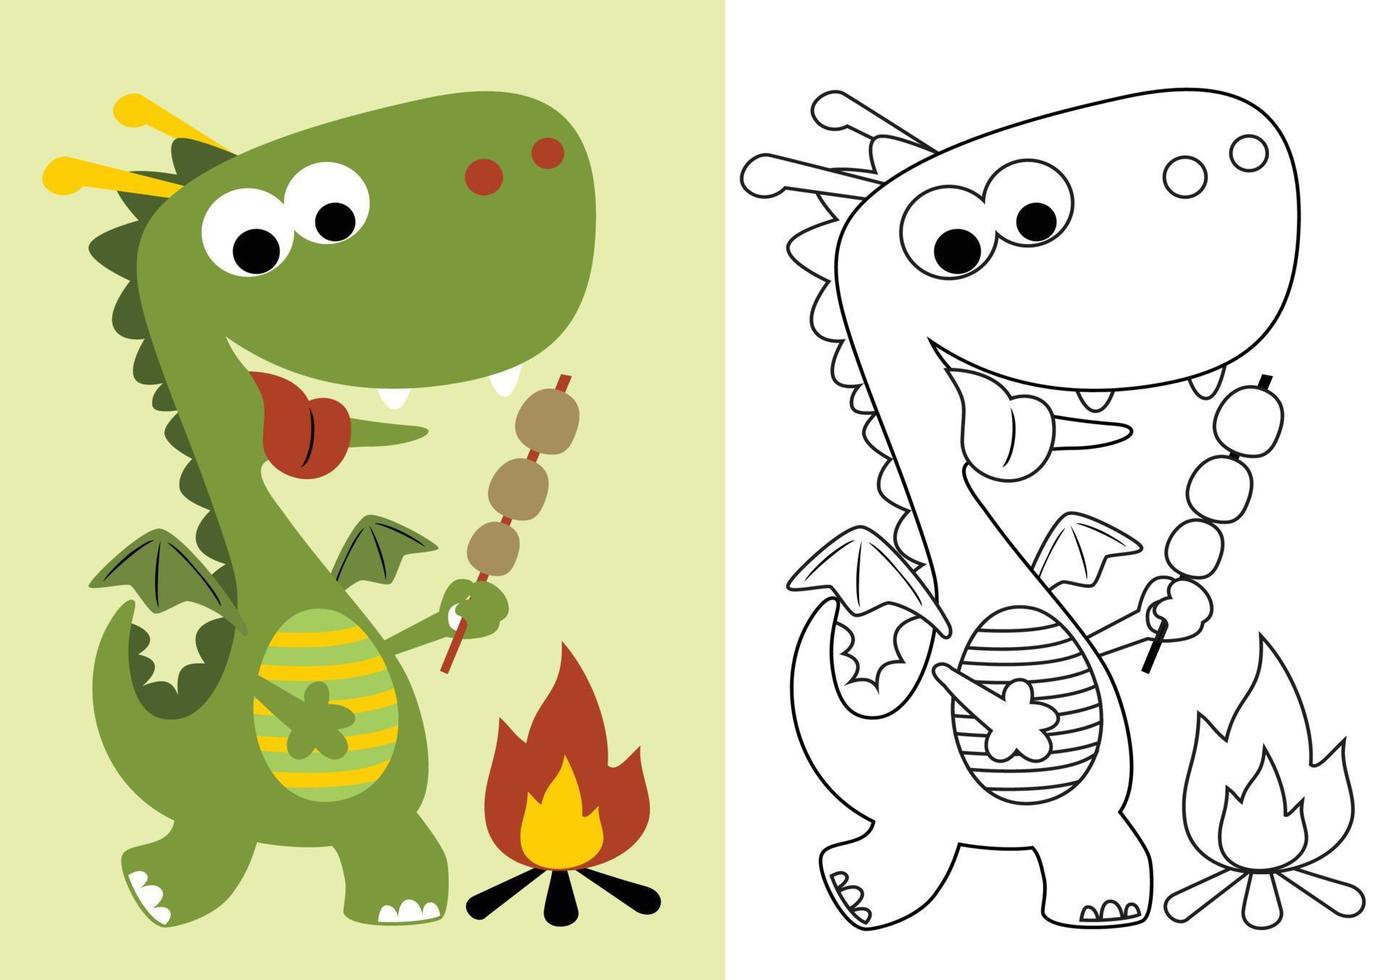 vector cartoon of funny dragon roasting meatballs, coloring book or page